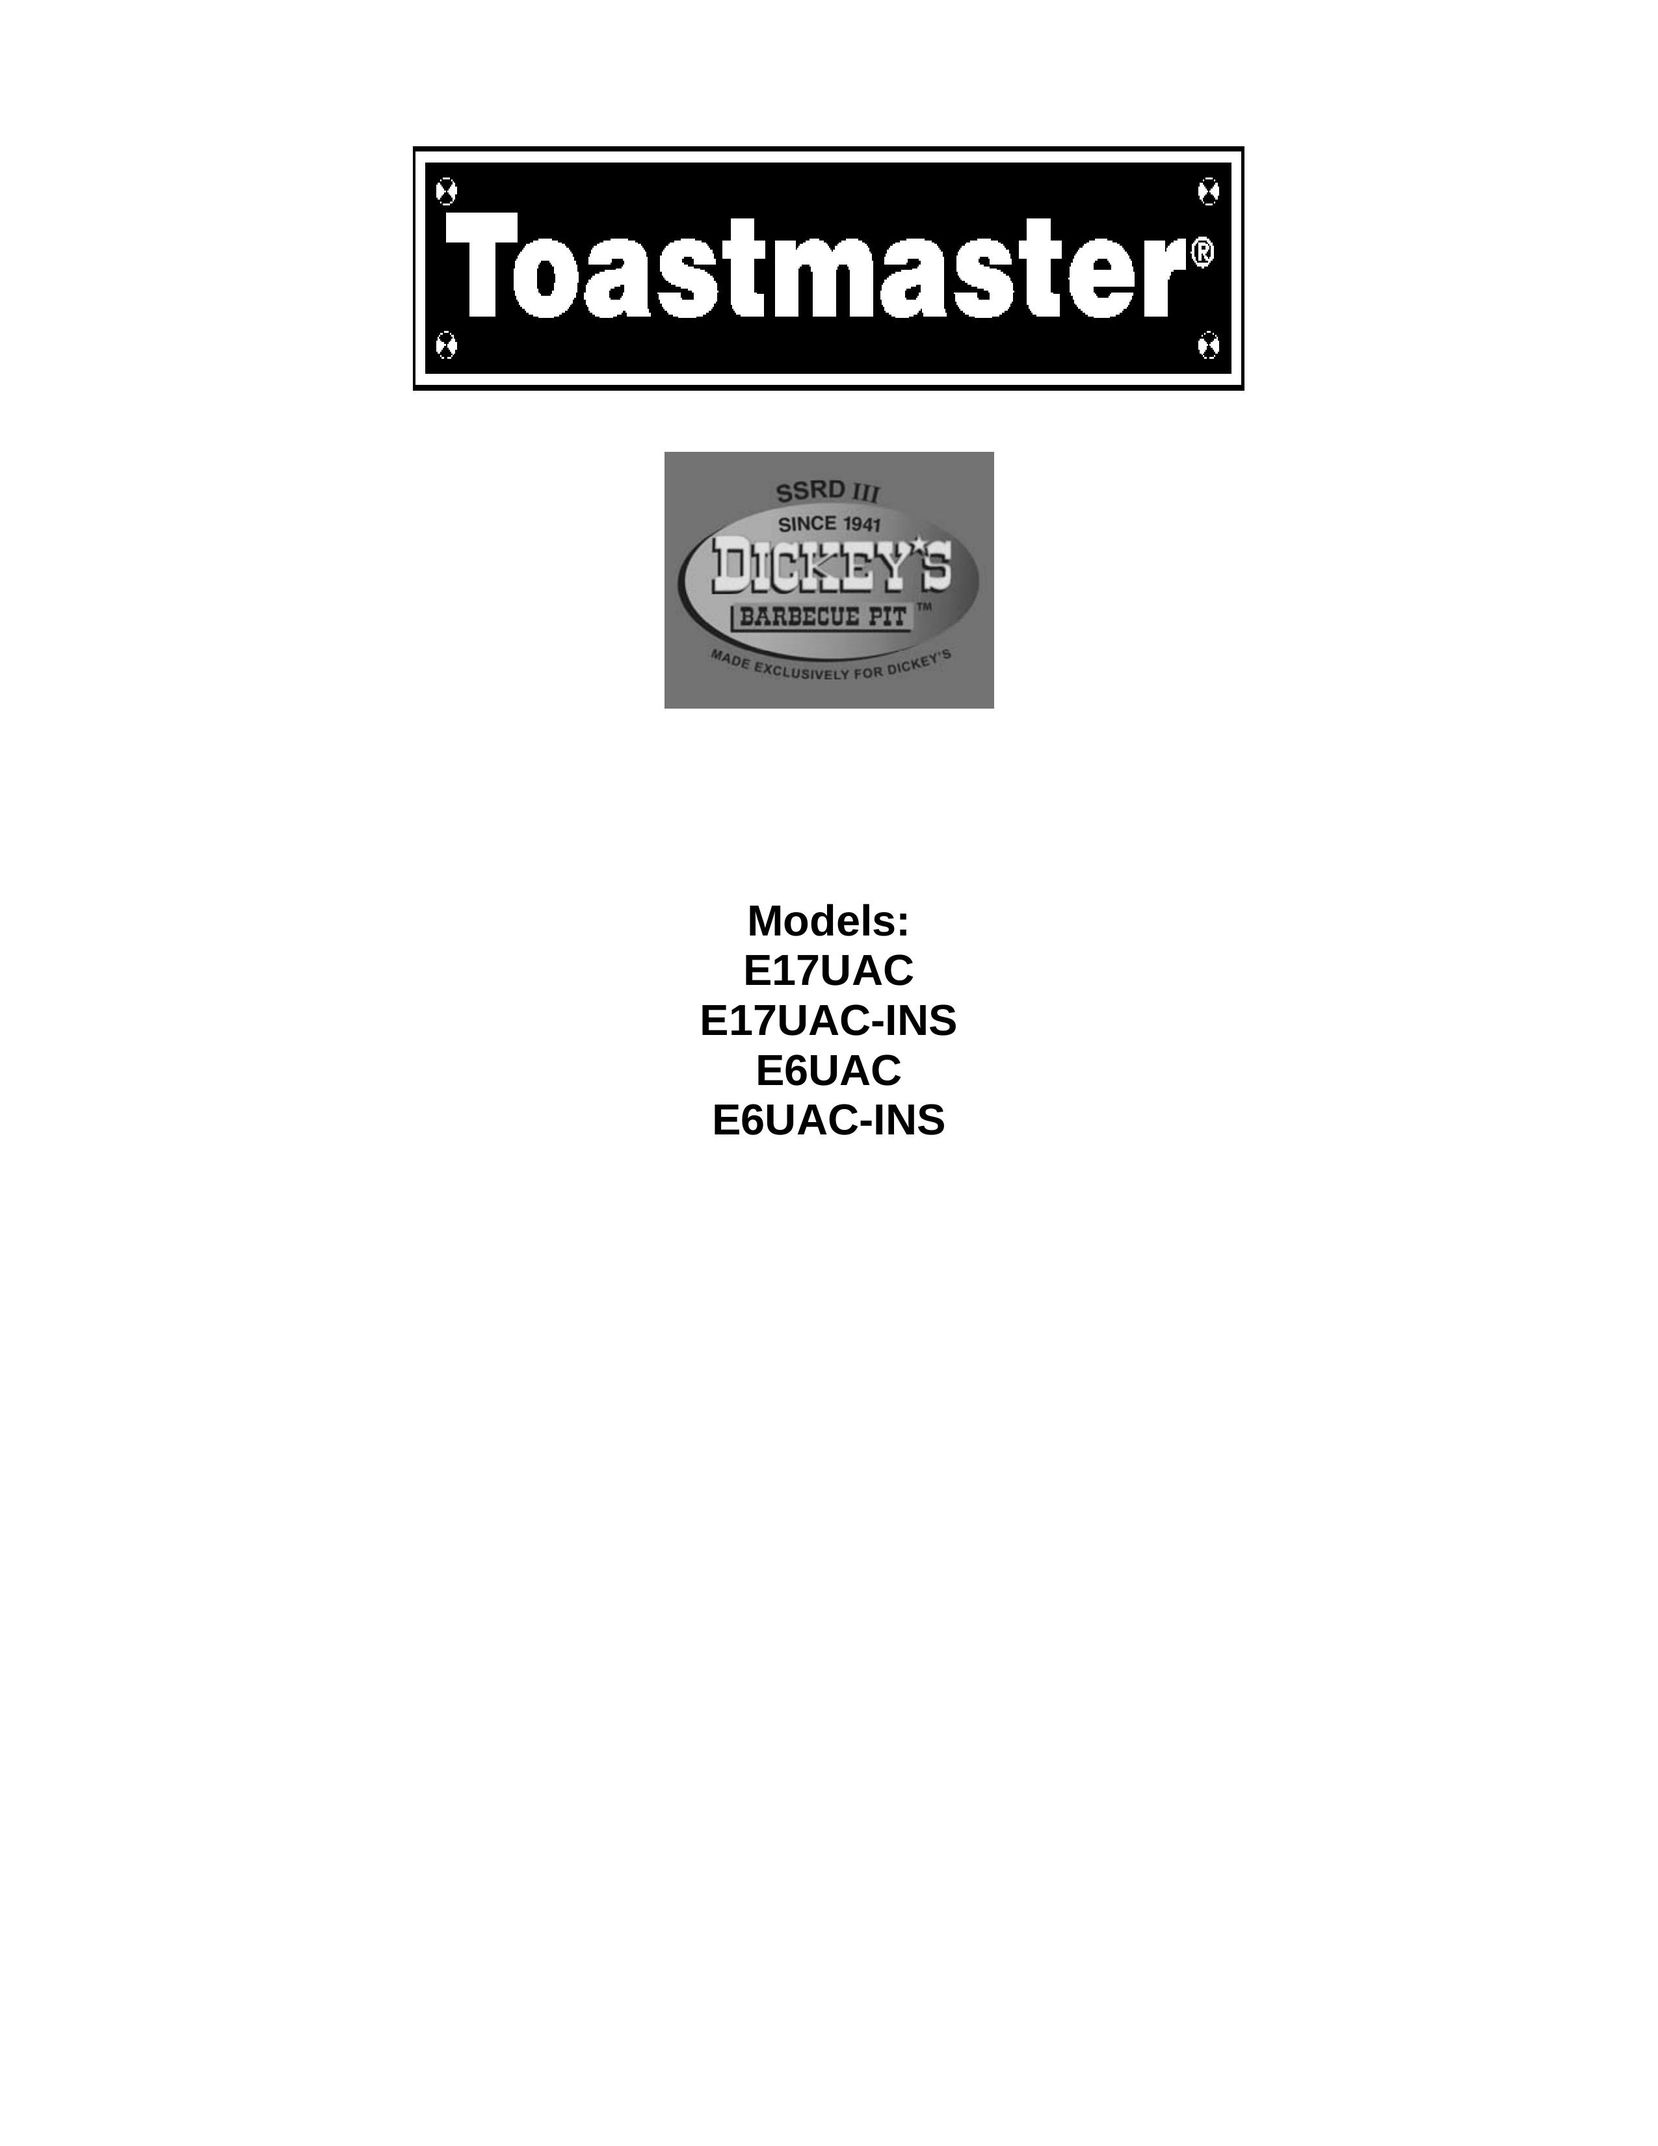 Toastmaster E17UAC-INS Food Warmer User Manual